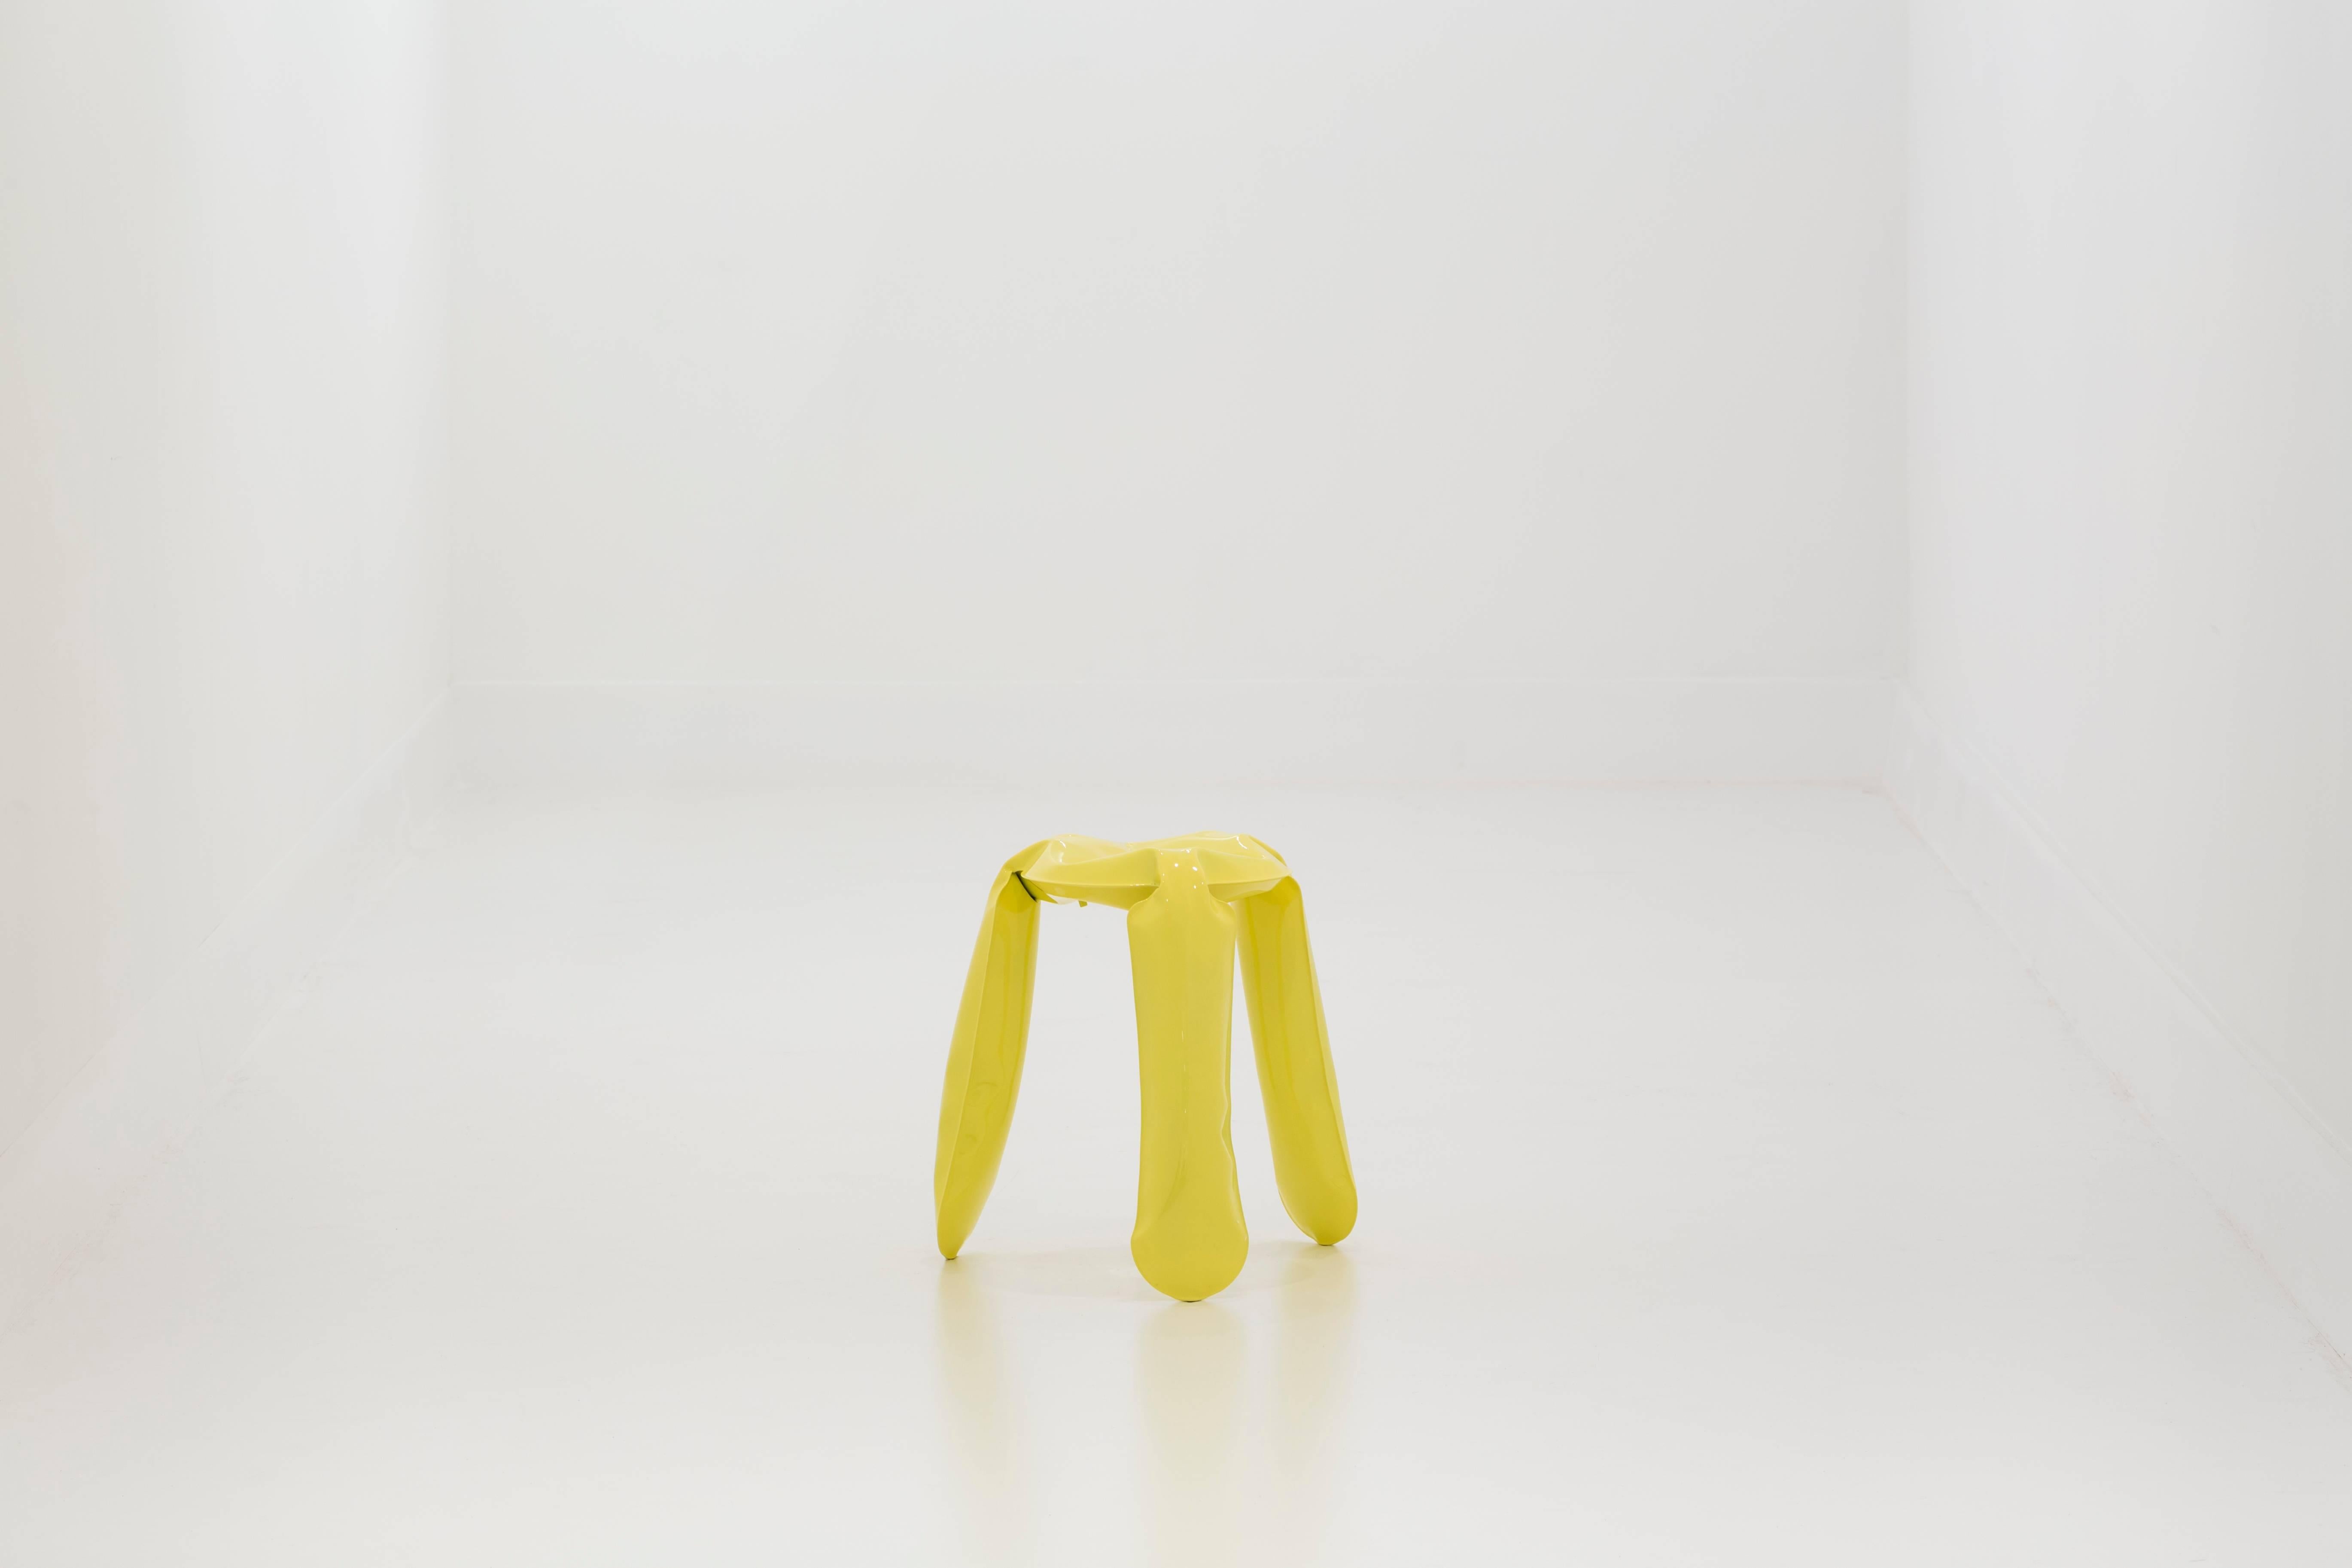 Plopp Stool 'Mini' by Zieta Prozessdesign, Stainless Steel ‘Inox’ Version For Sale 3